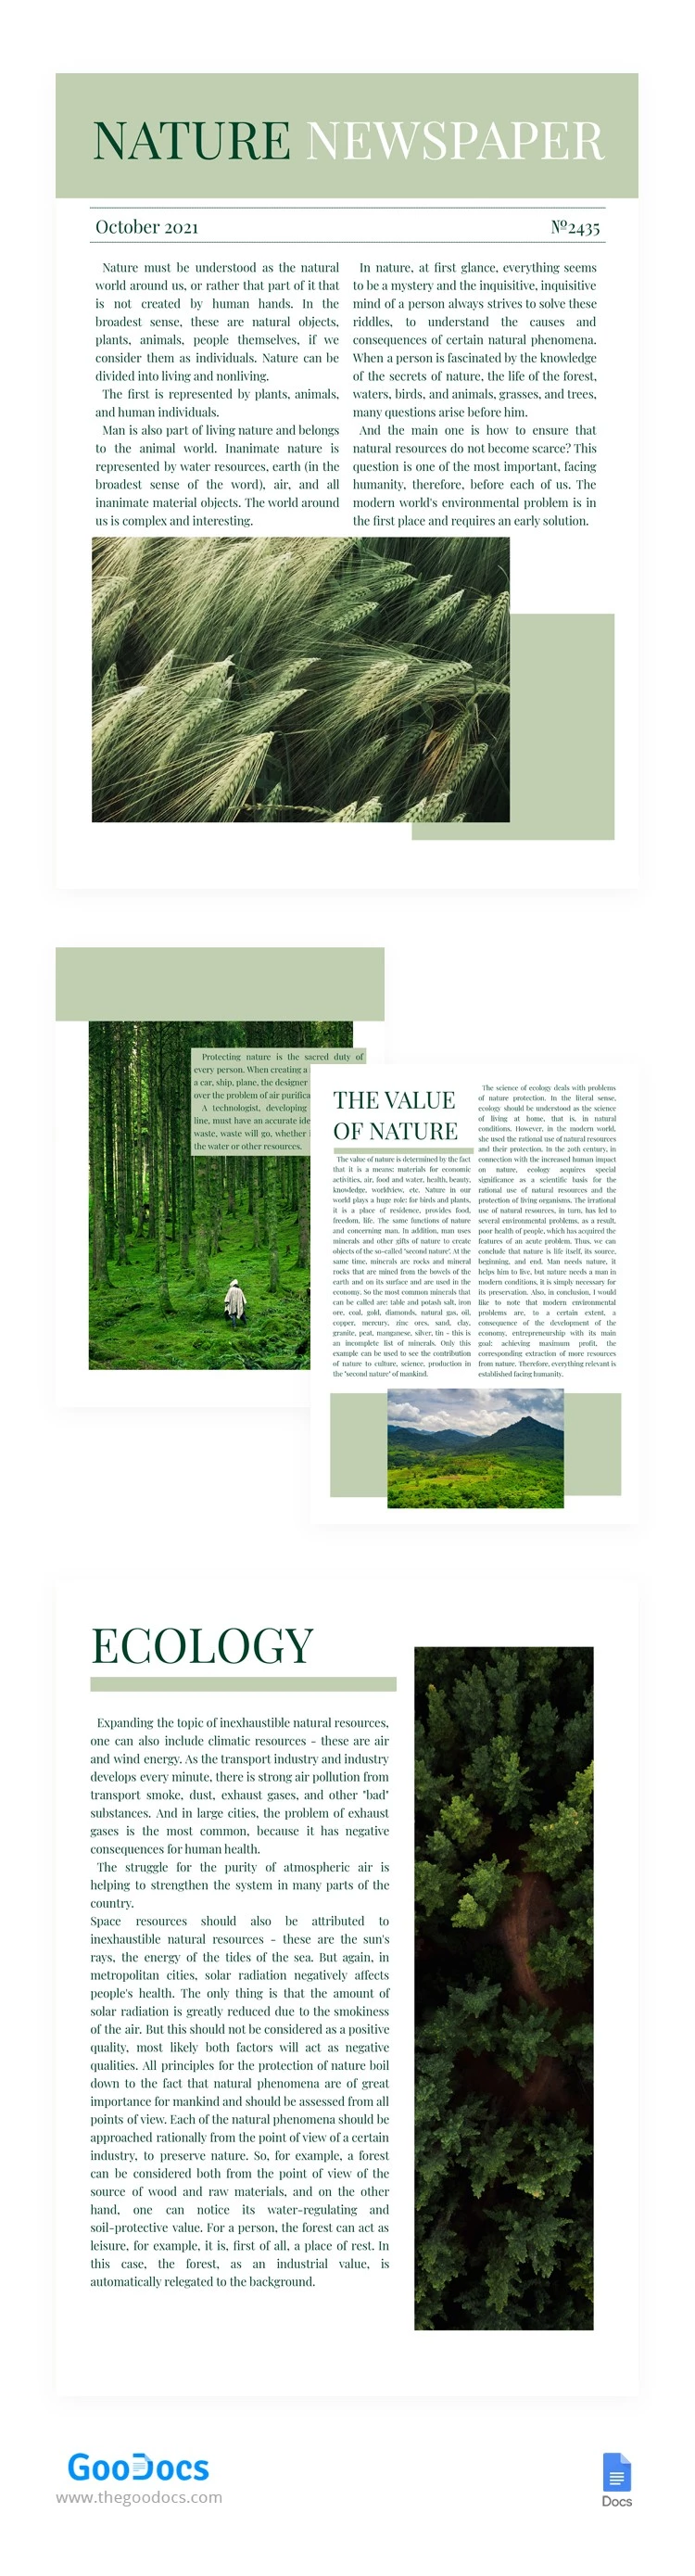 Periódico de Naturaleza Verde - free Google Docs Template - 10062140